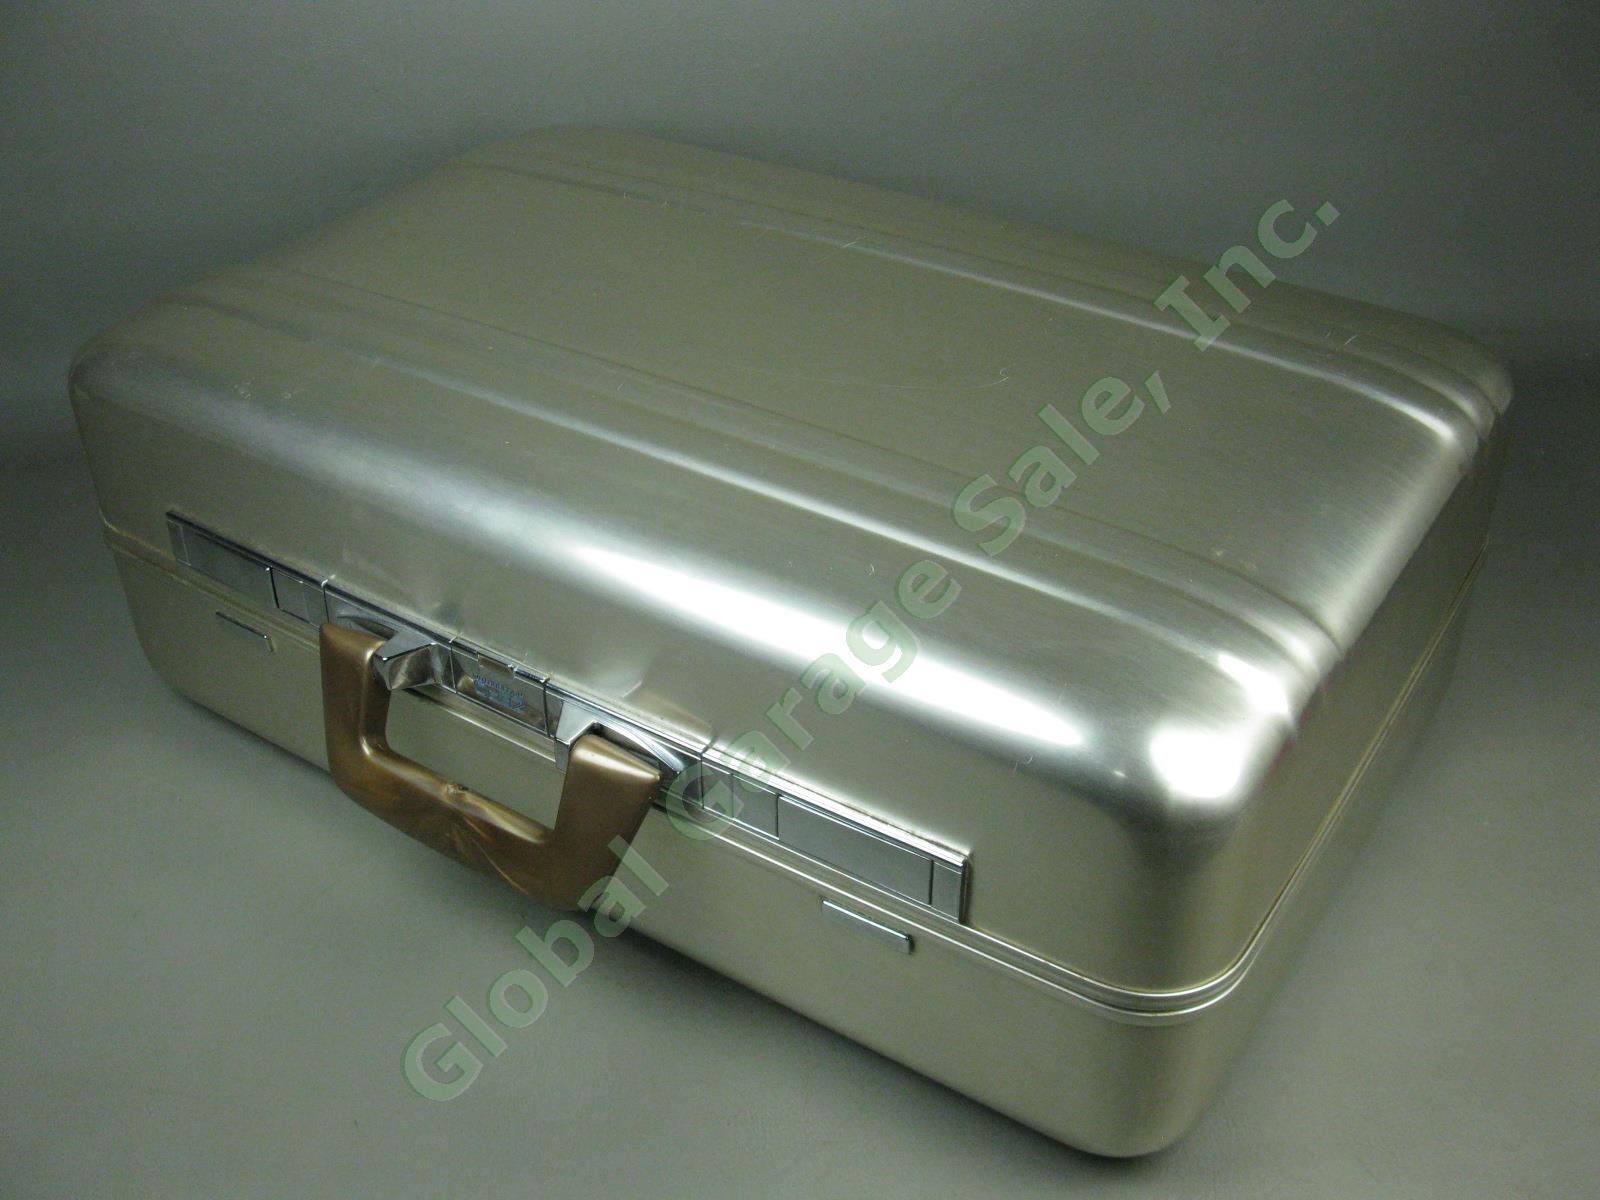 Zero Halliburton Presto Aluminum Combo Lock Briefcase Suitcase Luggage 21x13x8 6